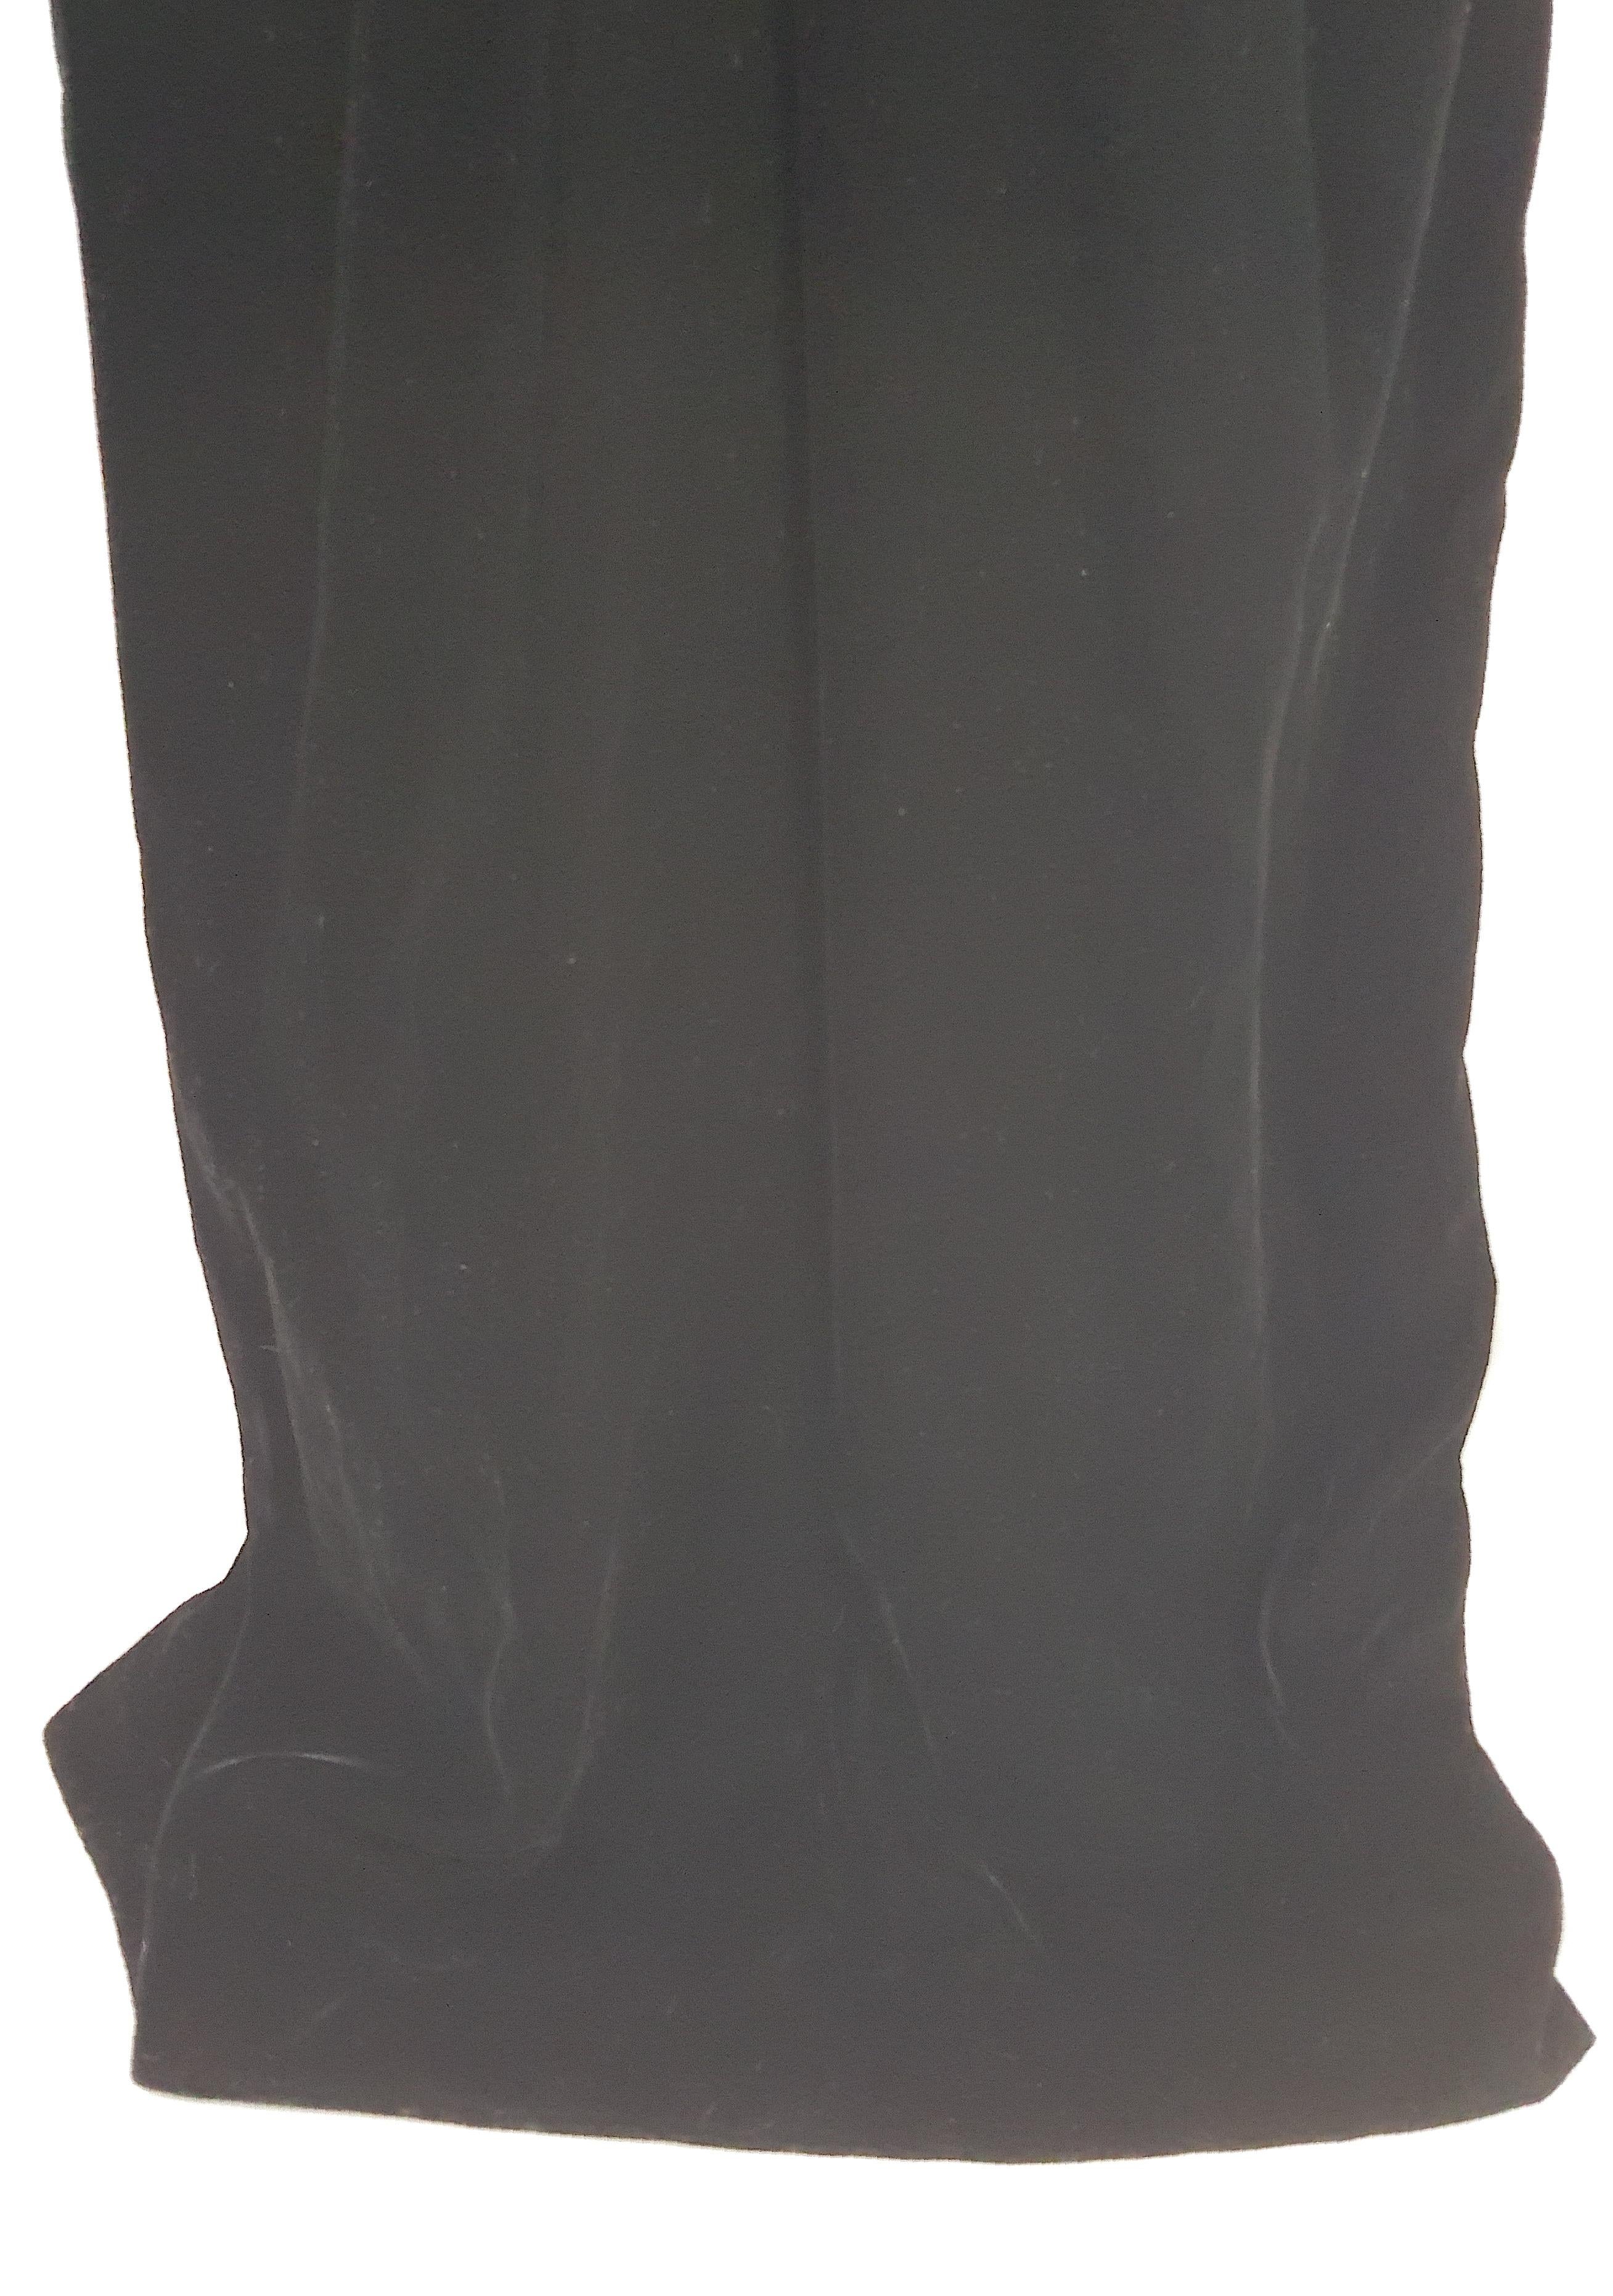 1980s VictorCosta GatheredRuched RedSatin BlackVelvet LongSlit Formal Maxi Gown For Sale 1